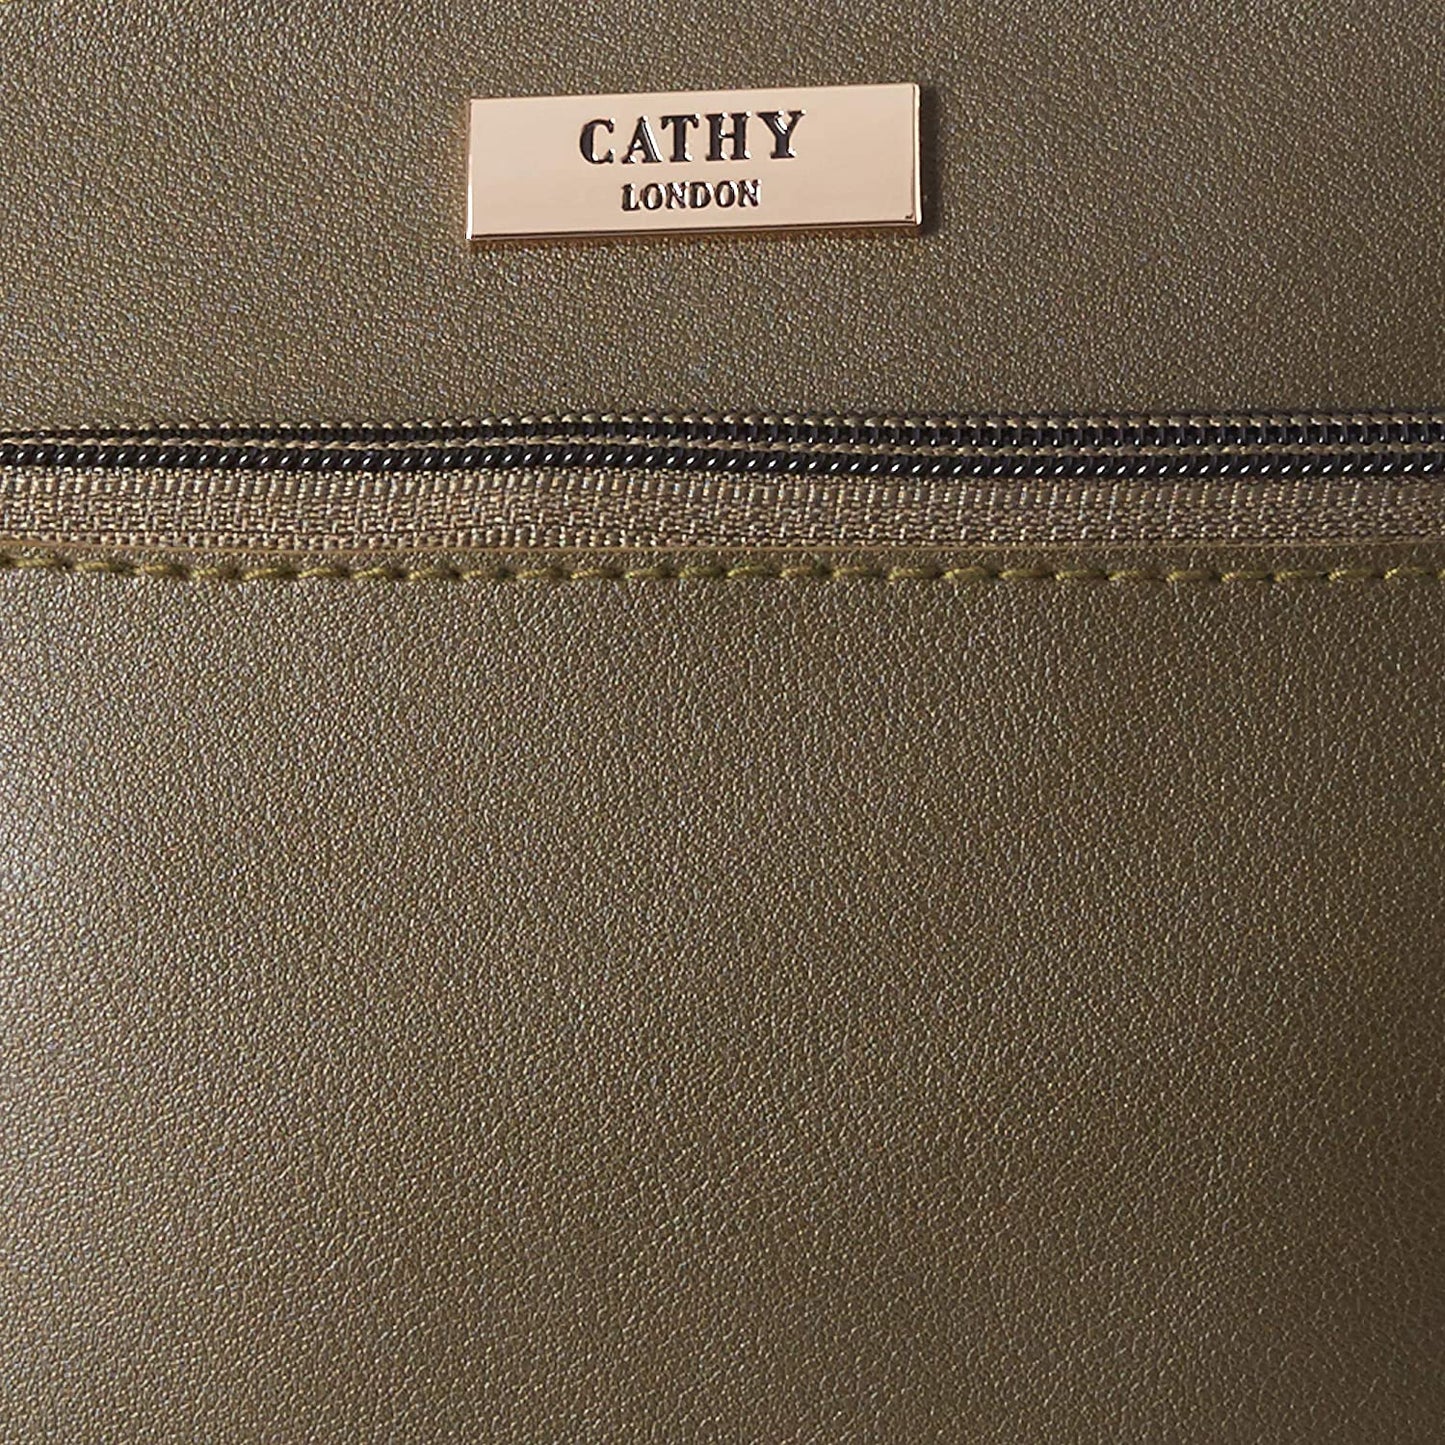 Cathy London Women's Sling Bag